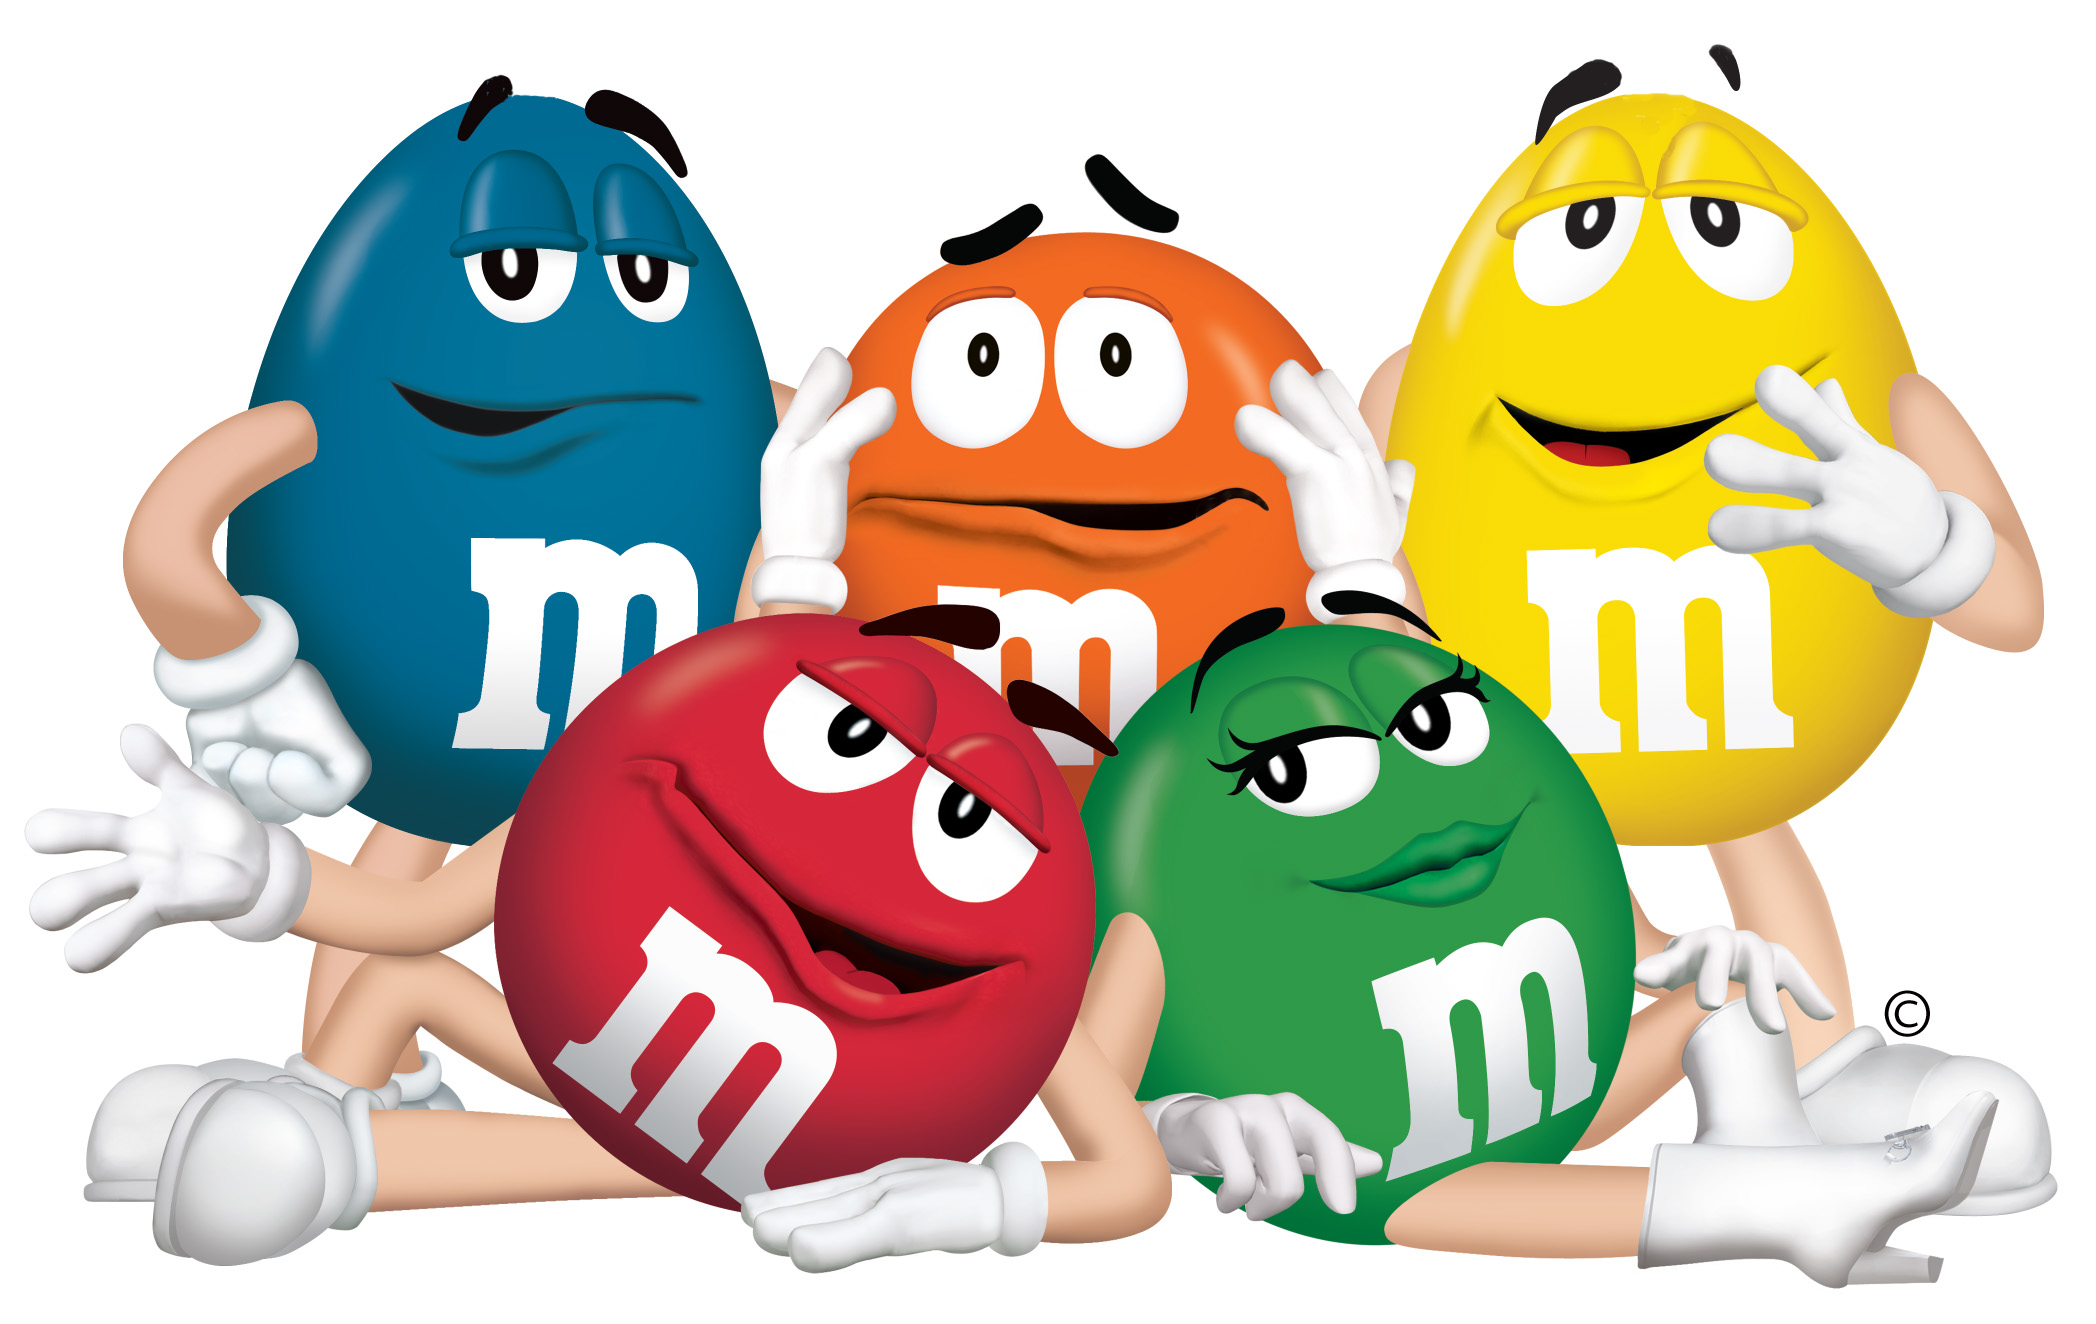 M Candy - M Candy - Sticker